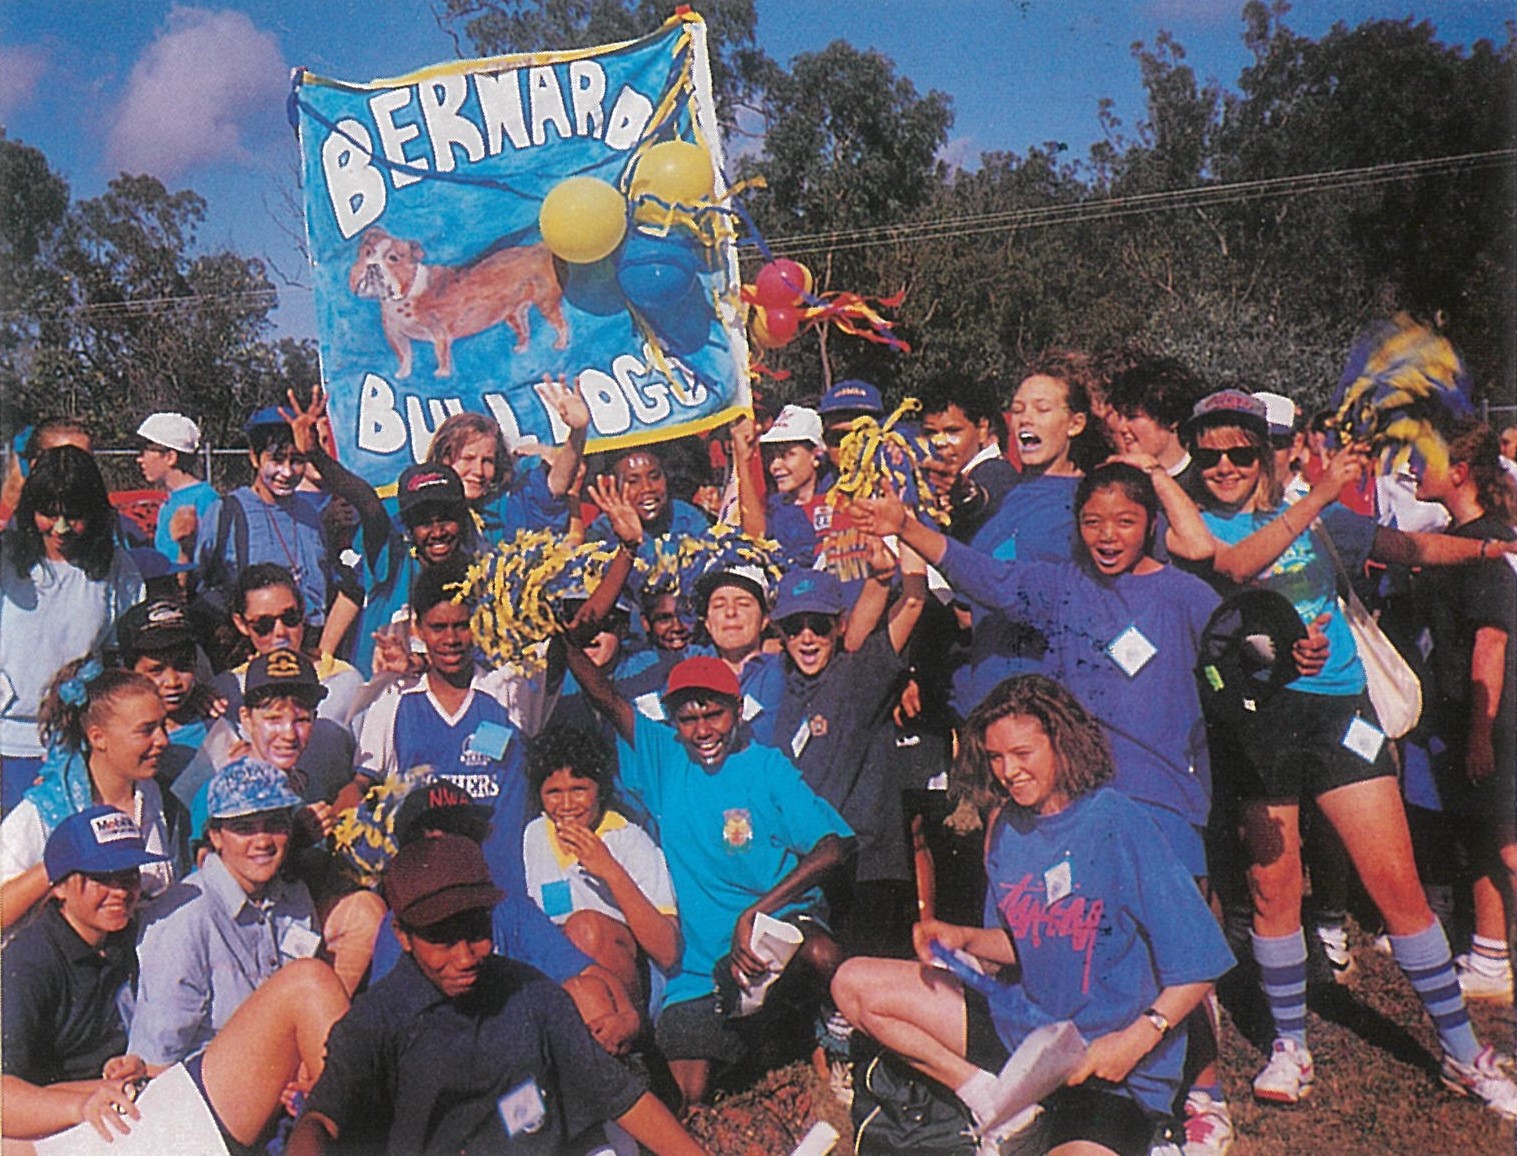 1992 Sports Day - Bernards Bulldogs